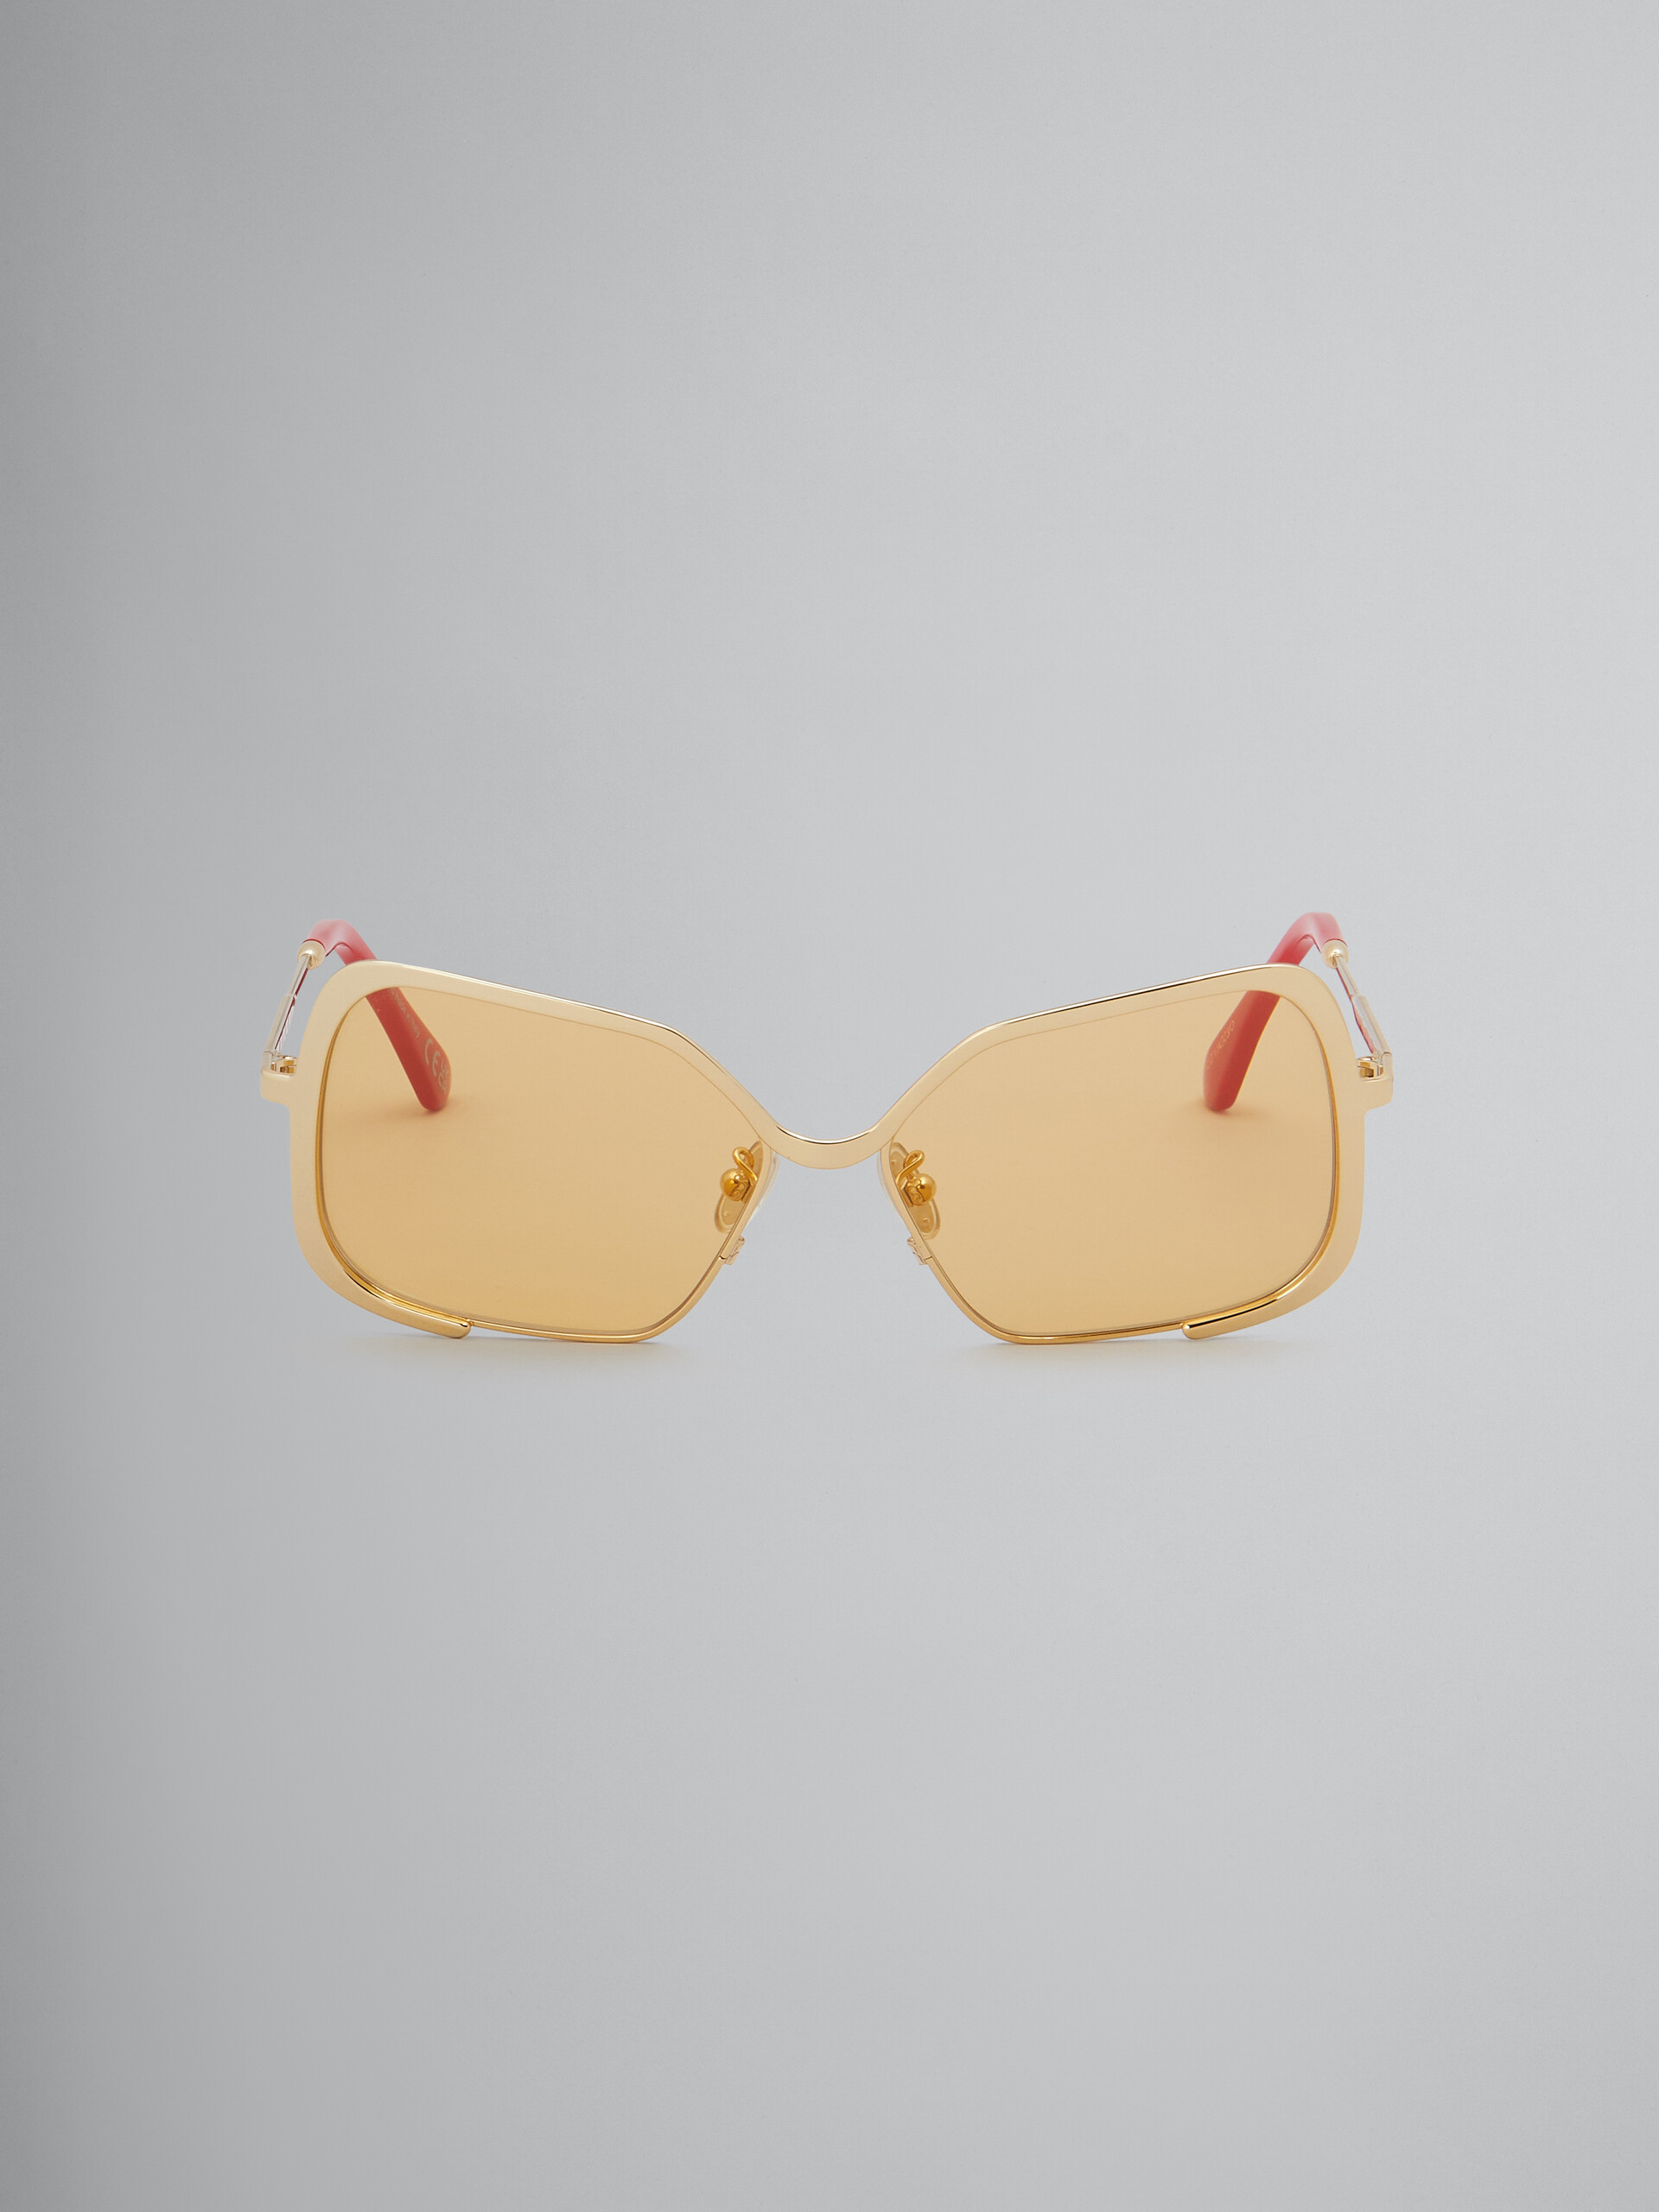 Goldfarbene Sonnenbrille Unila - Optisch - Image 1